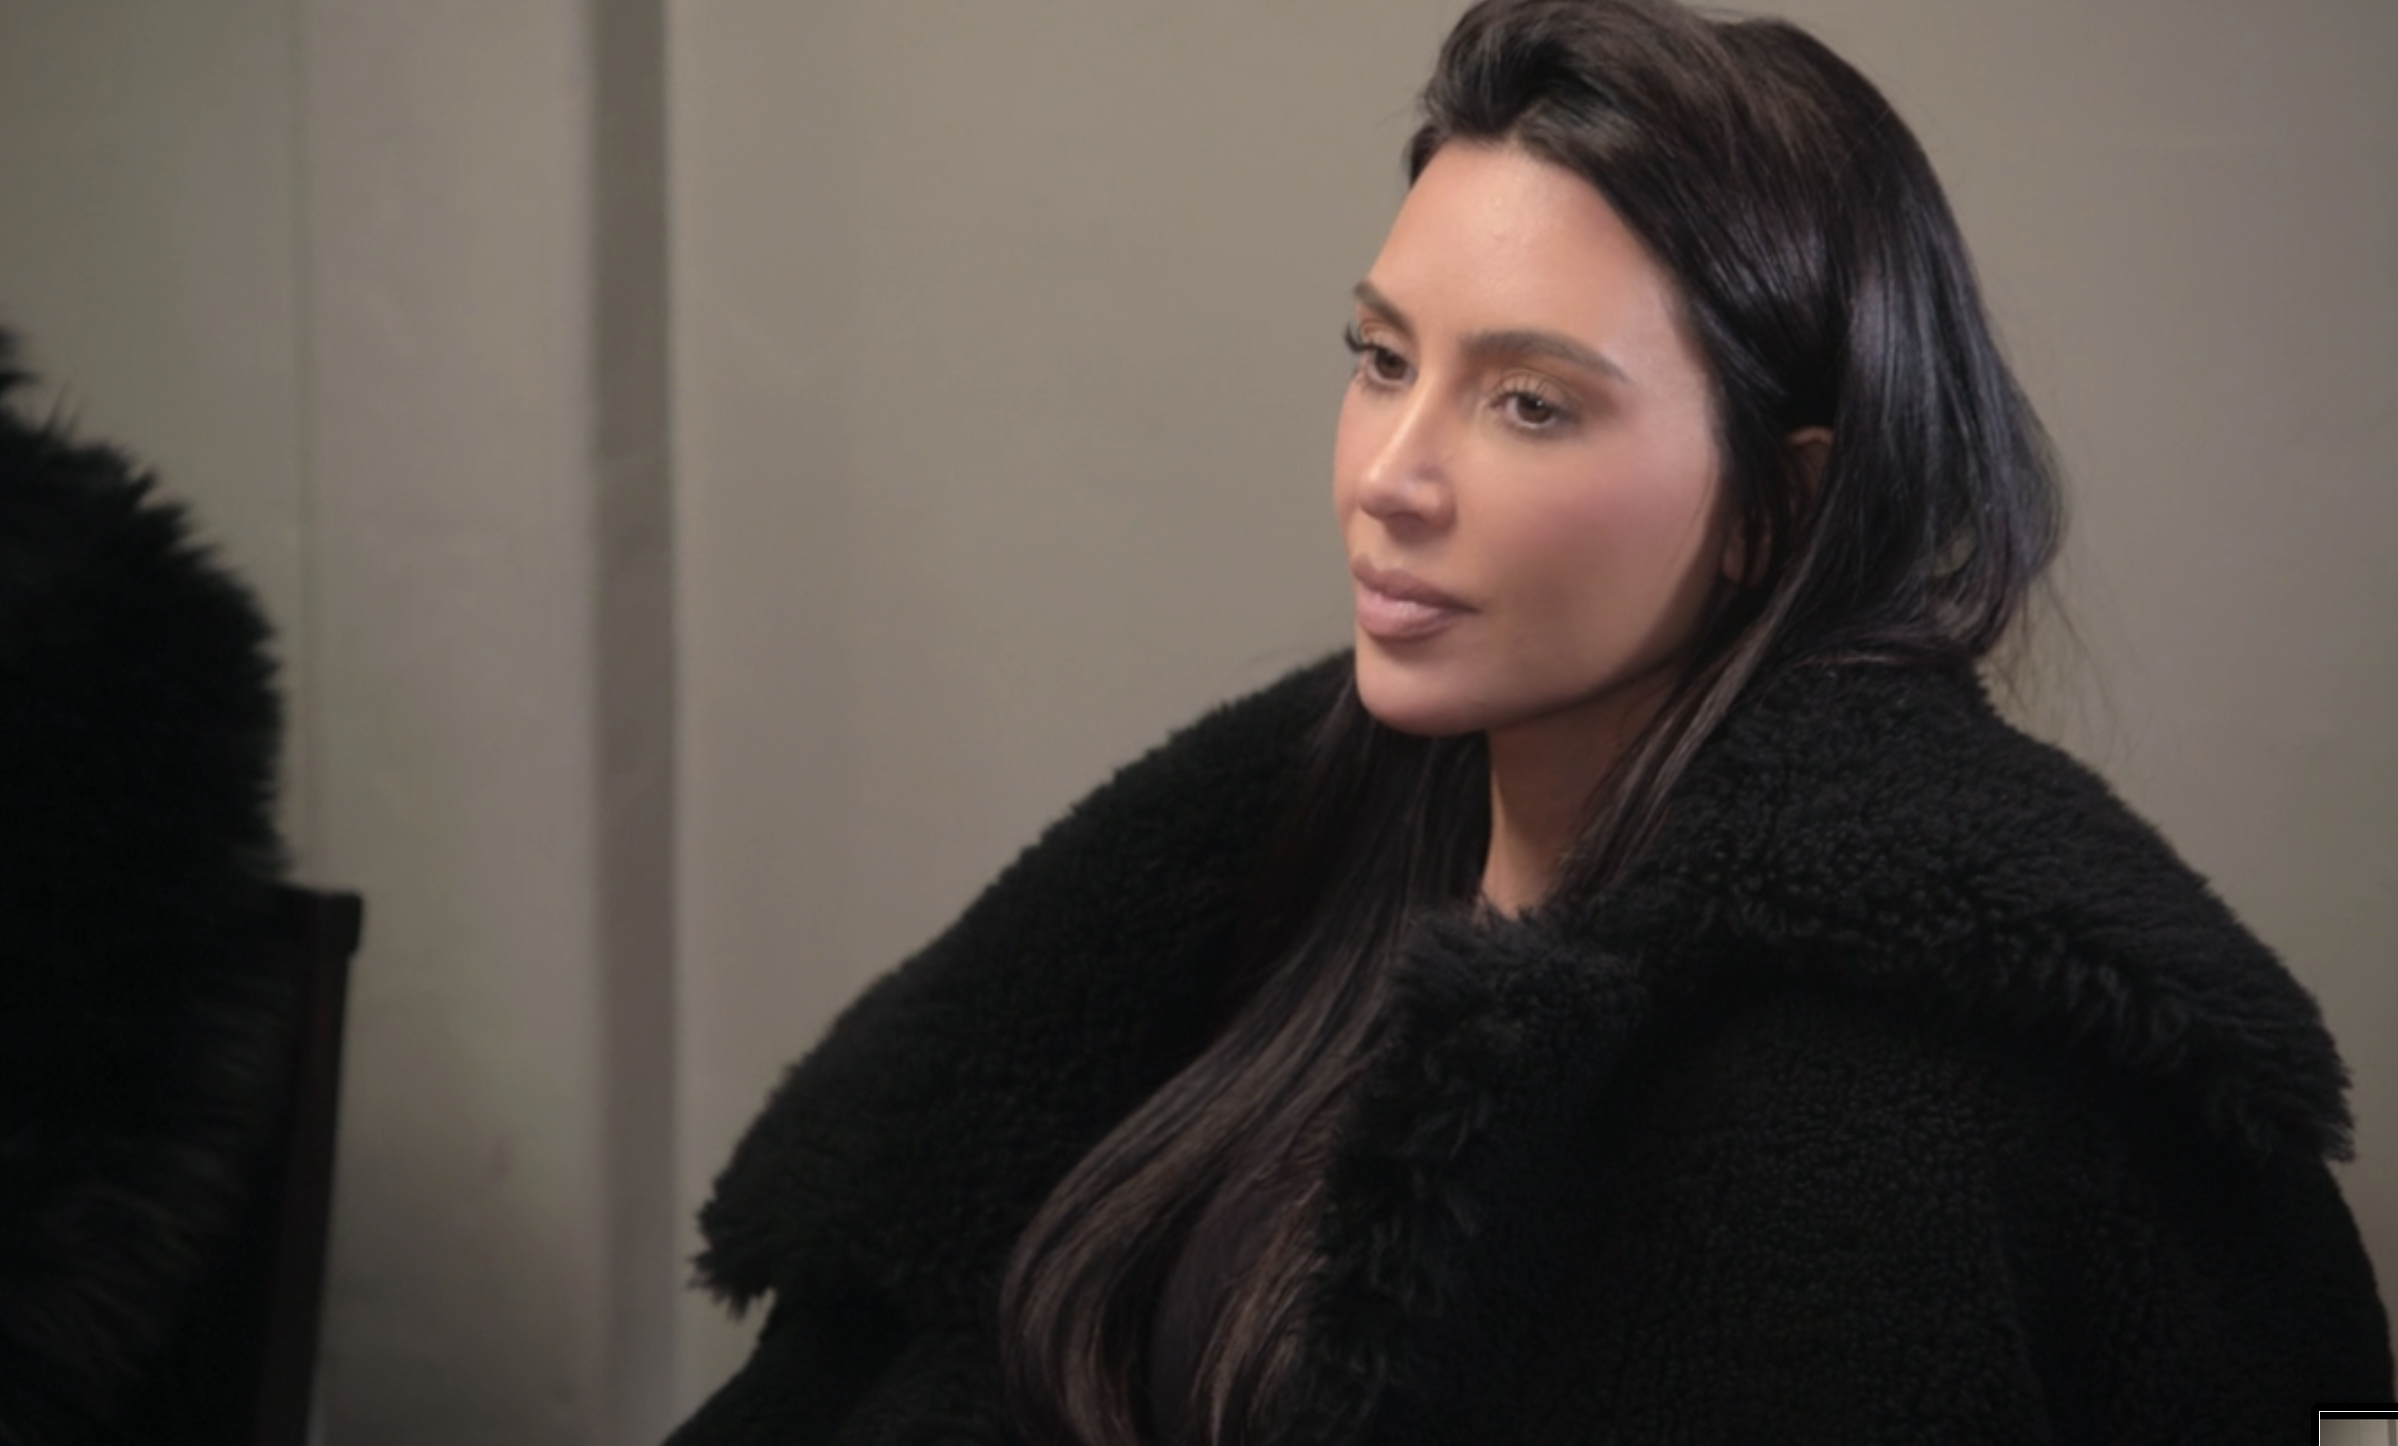 Kim Kardashian sits in a formal setting, wearing a black fur coat